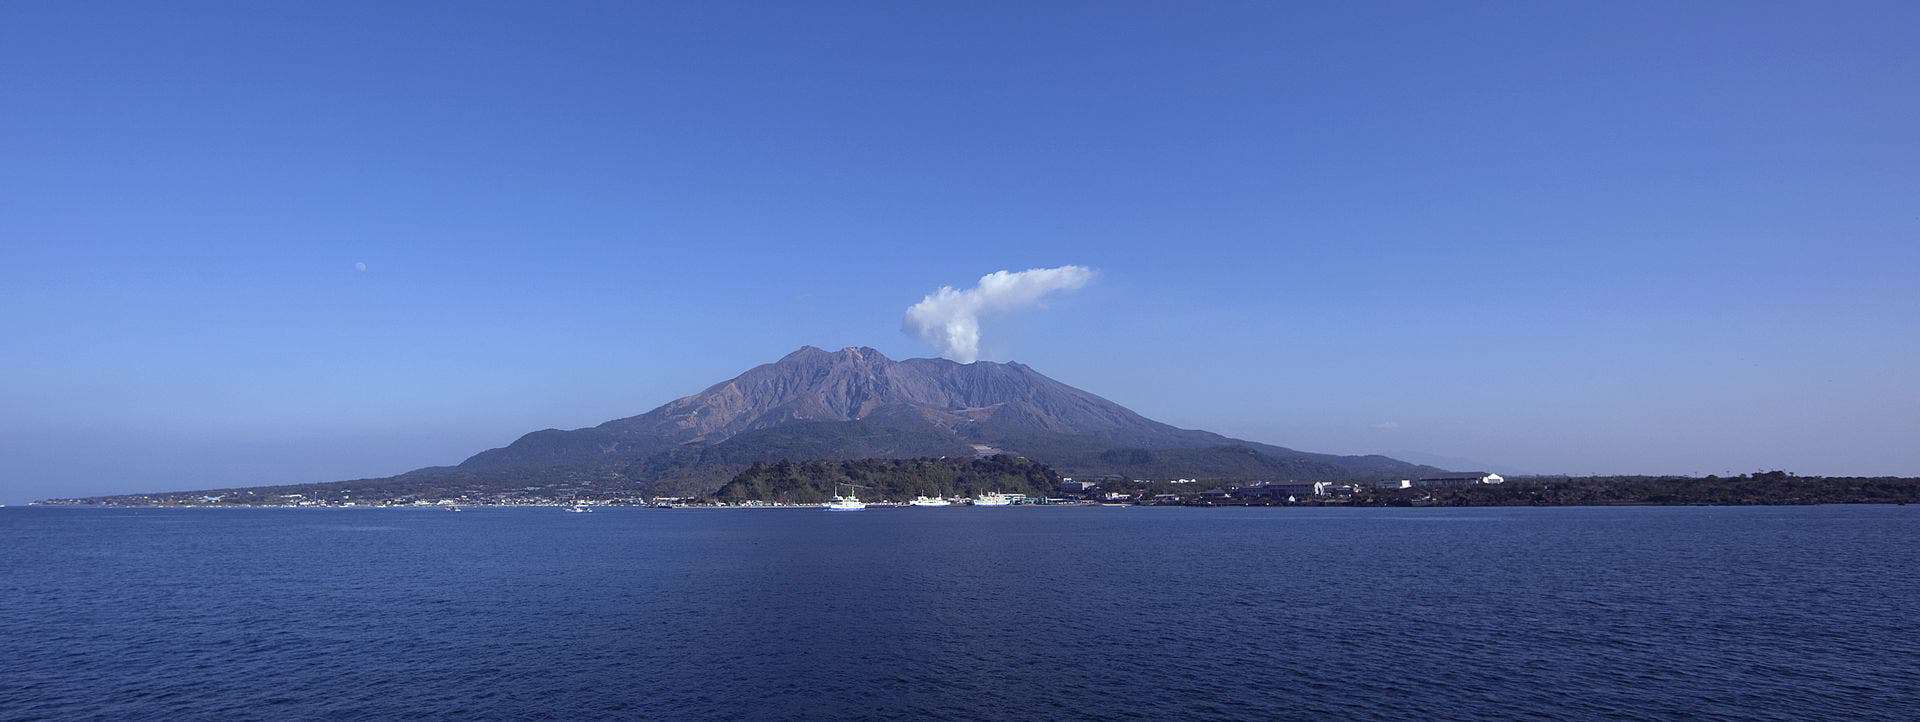 The Sakurajima Kagoshima volcano in Japan might be preparing for an eruption. Photo by TANAKA Juuyoh